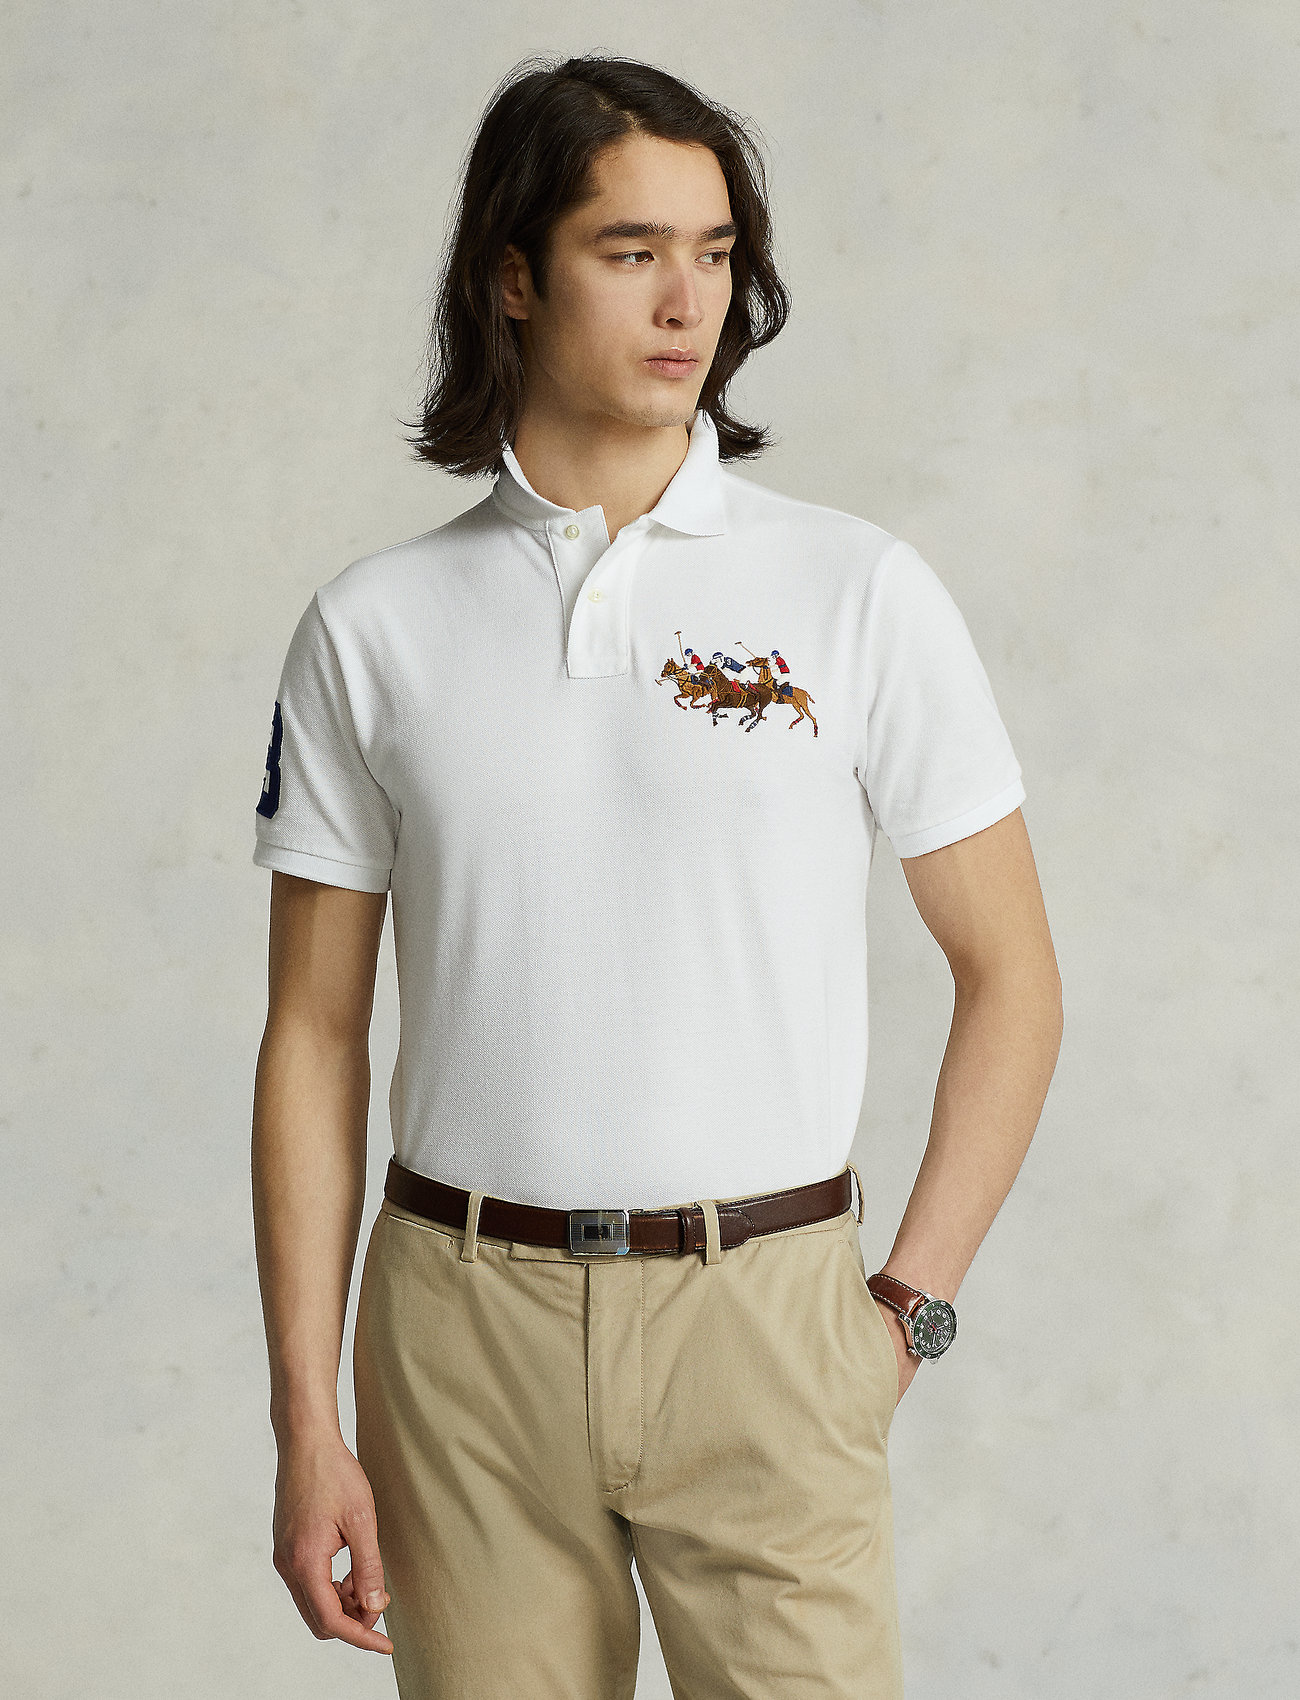 custom ralph lauren polo shirts